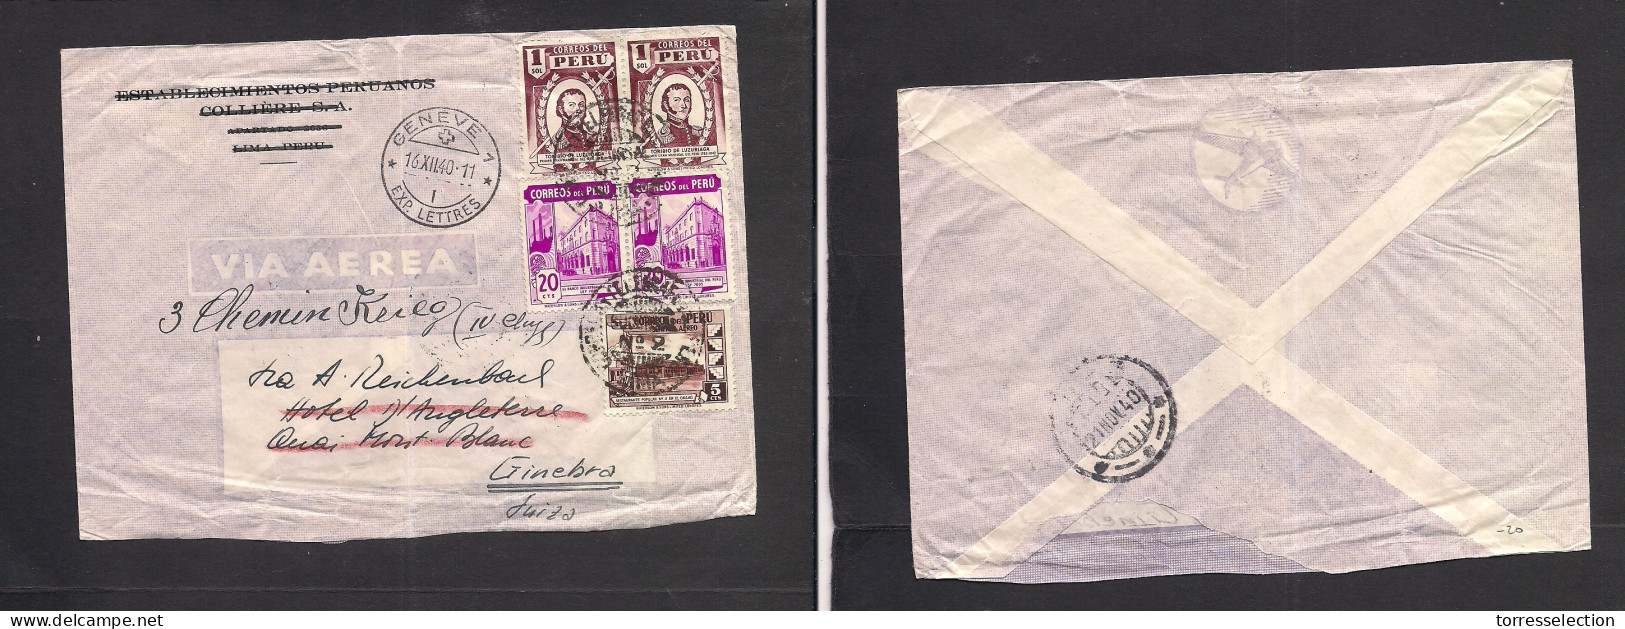 PERU. 1940. Lima Suc 2 - Switzerland, Geneva (16 Dec) Air Multifkd Envelope, Fwded 2,45 Soles Rate. - Pérou